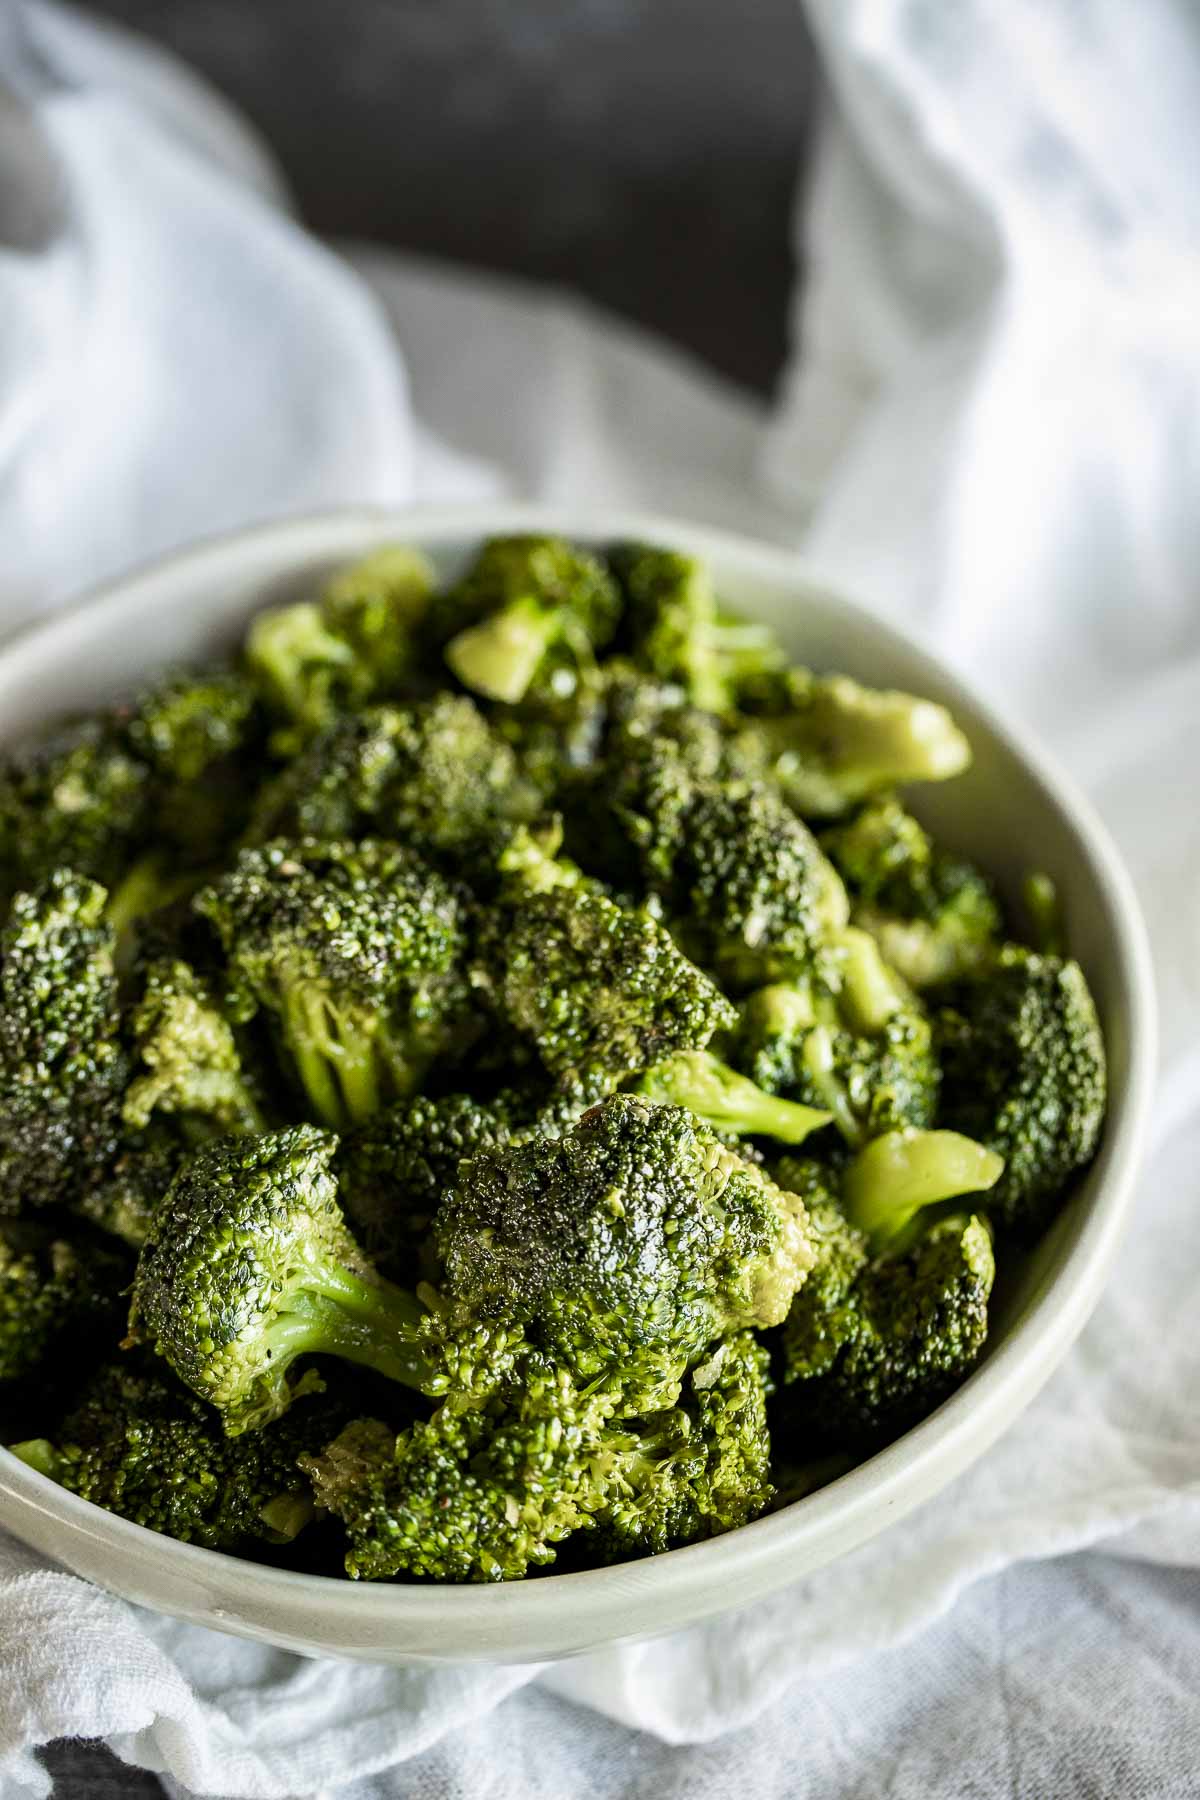 Sous vide broccoli in a white bowl.